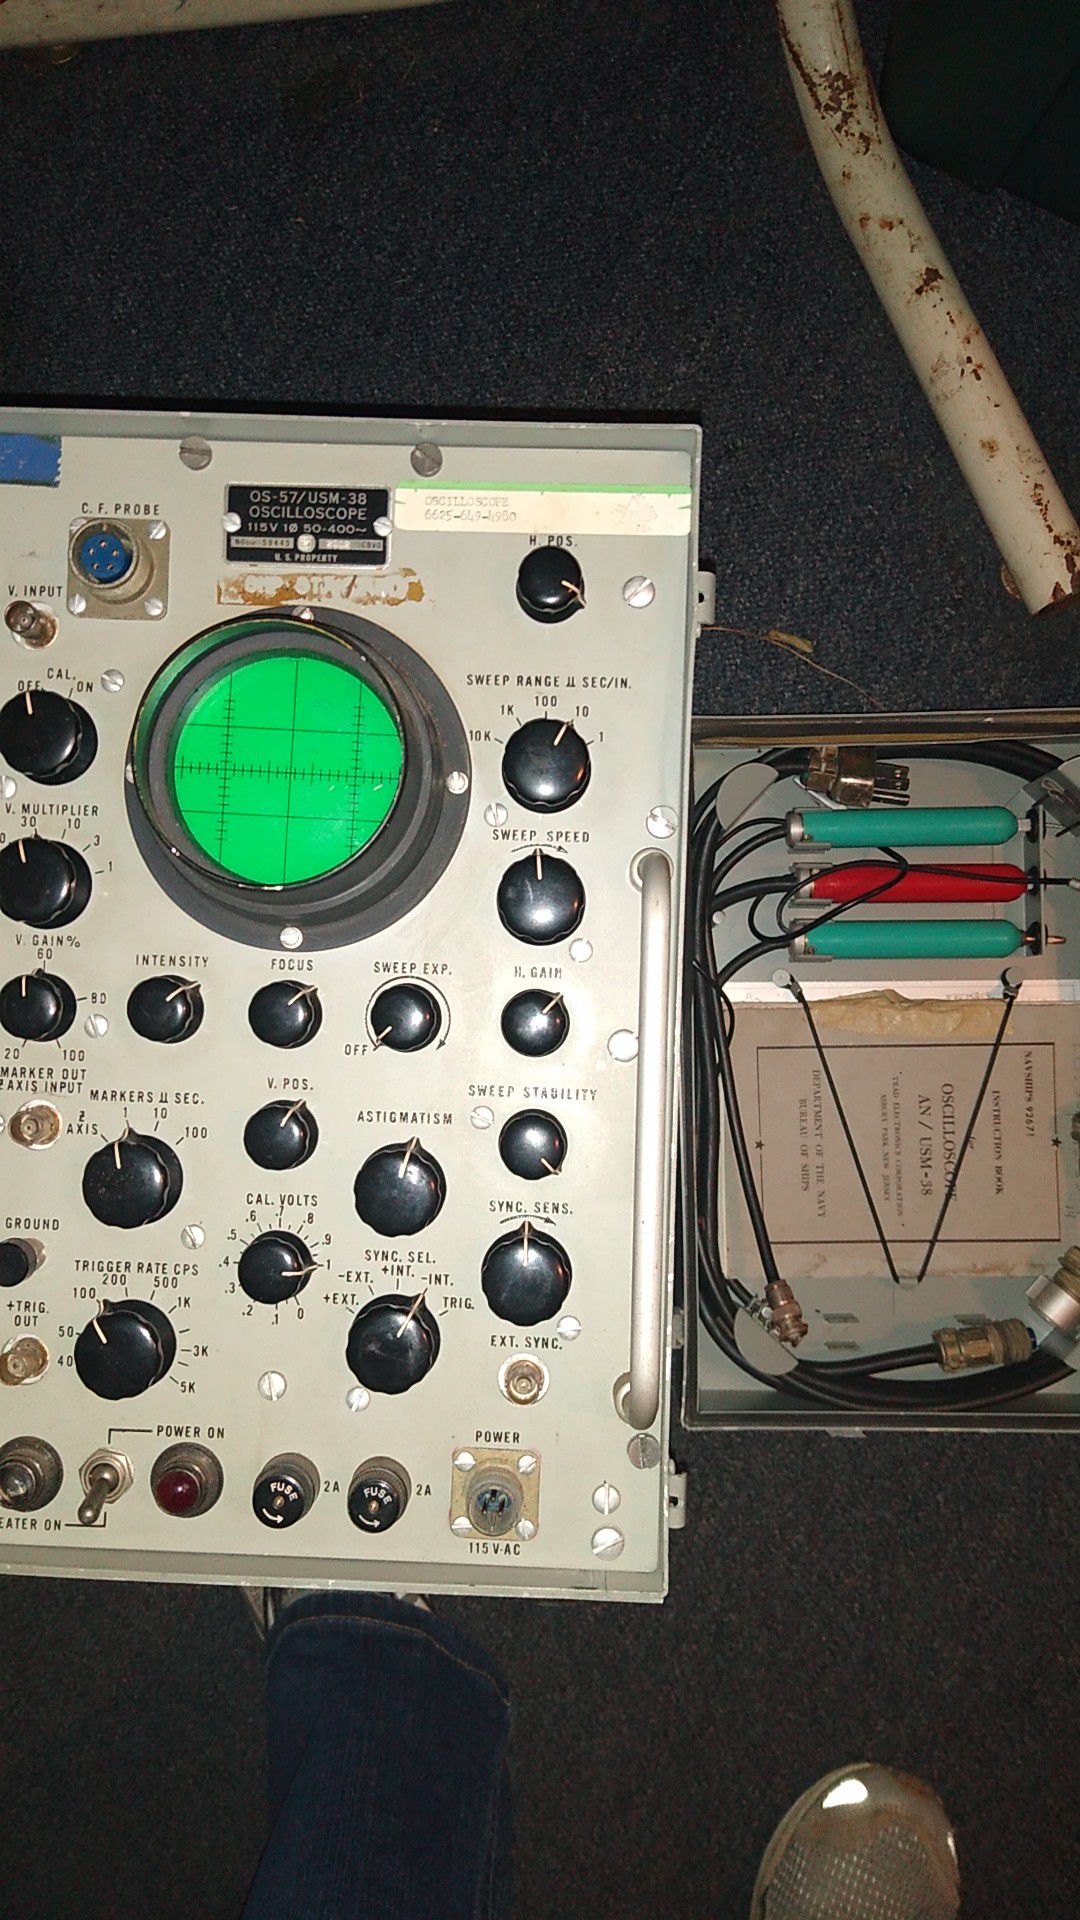 Vintage oscilloscope meter. Electrical